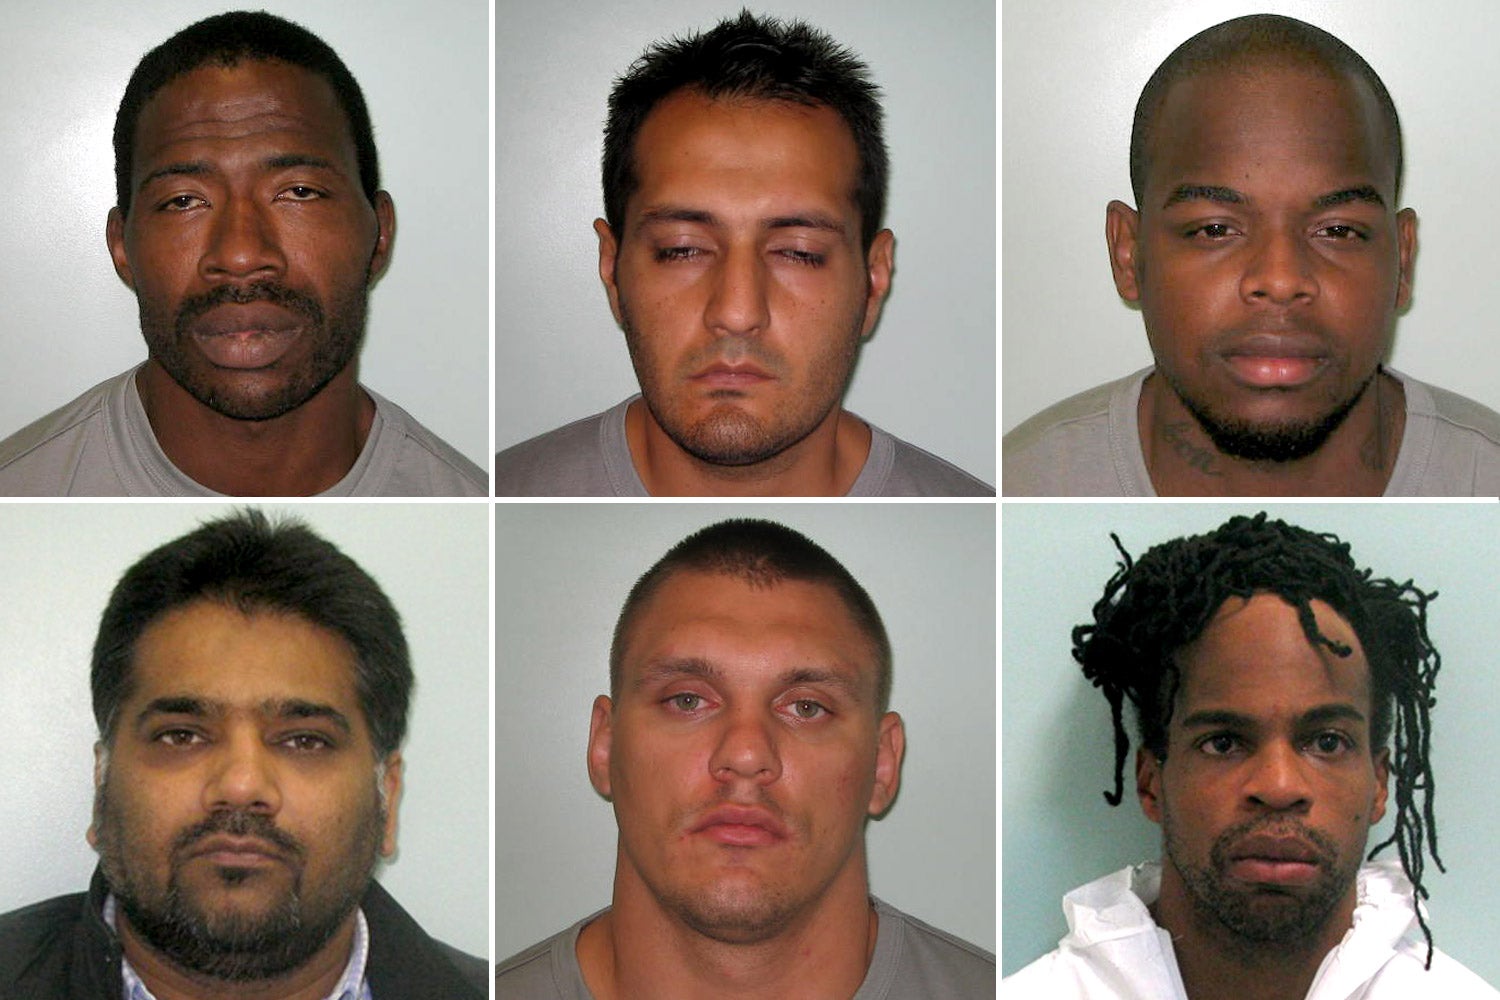 The jailed robbers, top row (l-r): David Sadiku, Aamir Kayani, Michael Carbon; bottom row (l-r): Amarjeet Bharj, Paulius Strasunskas, Francis Carbon